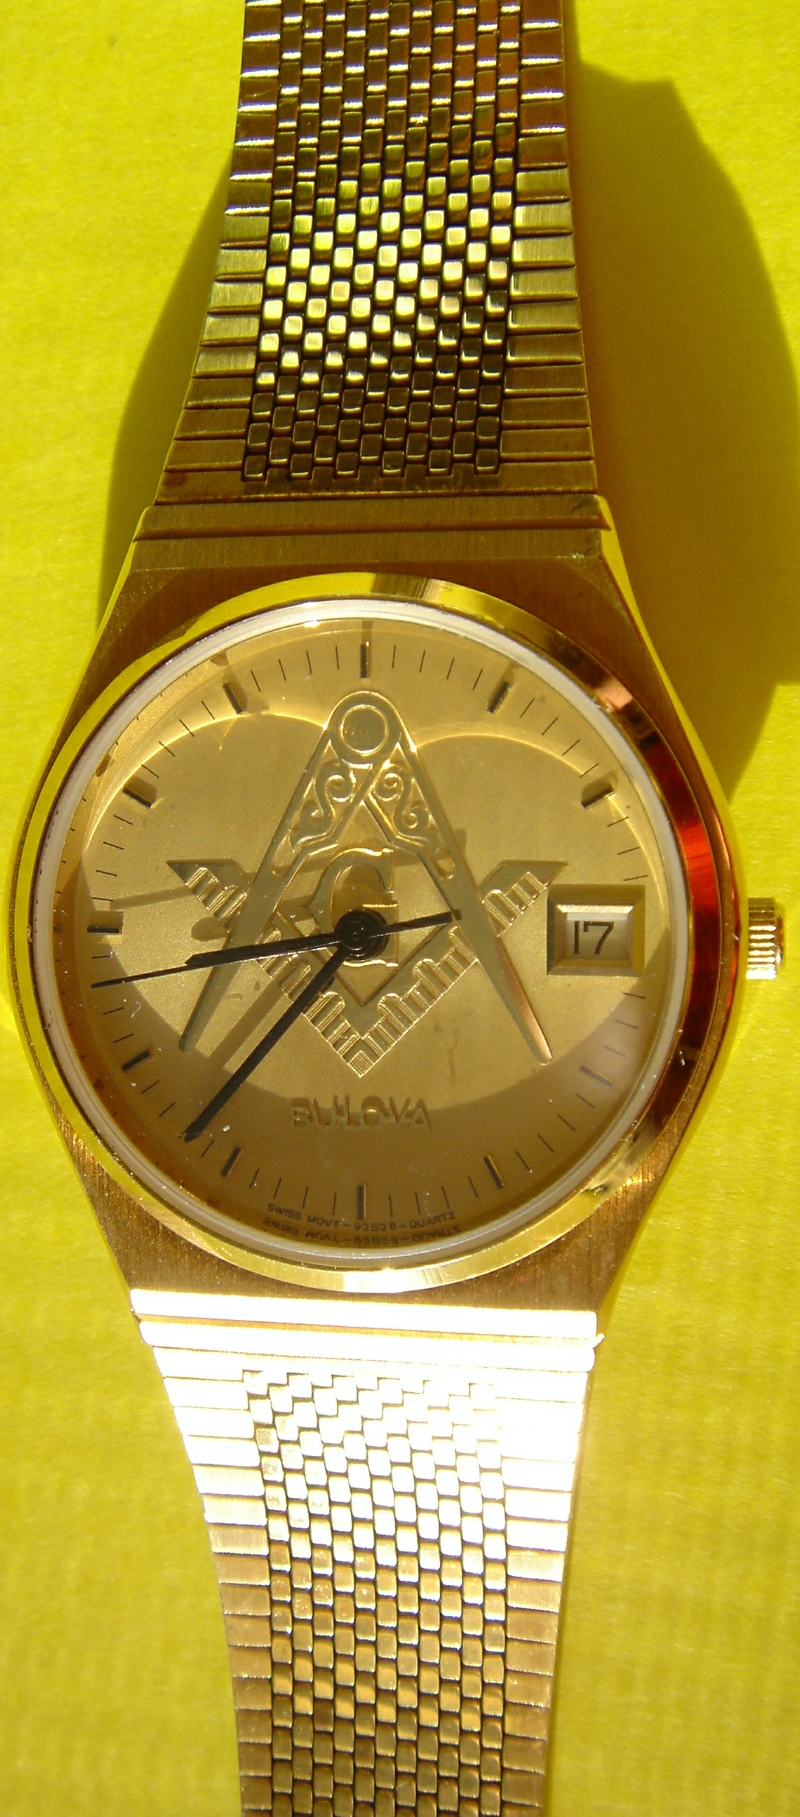 craba watch